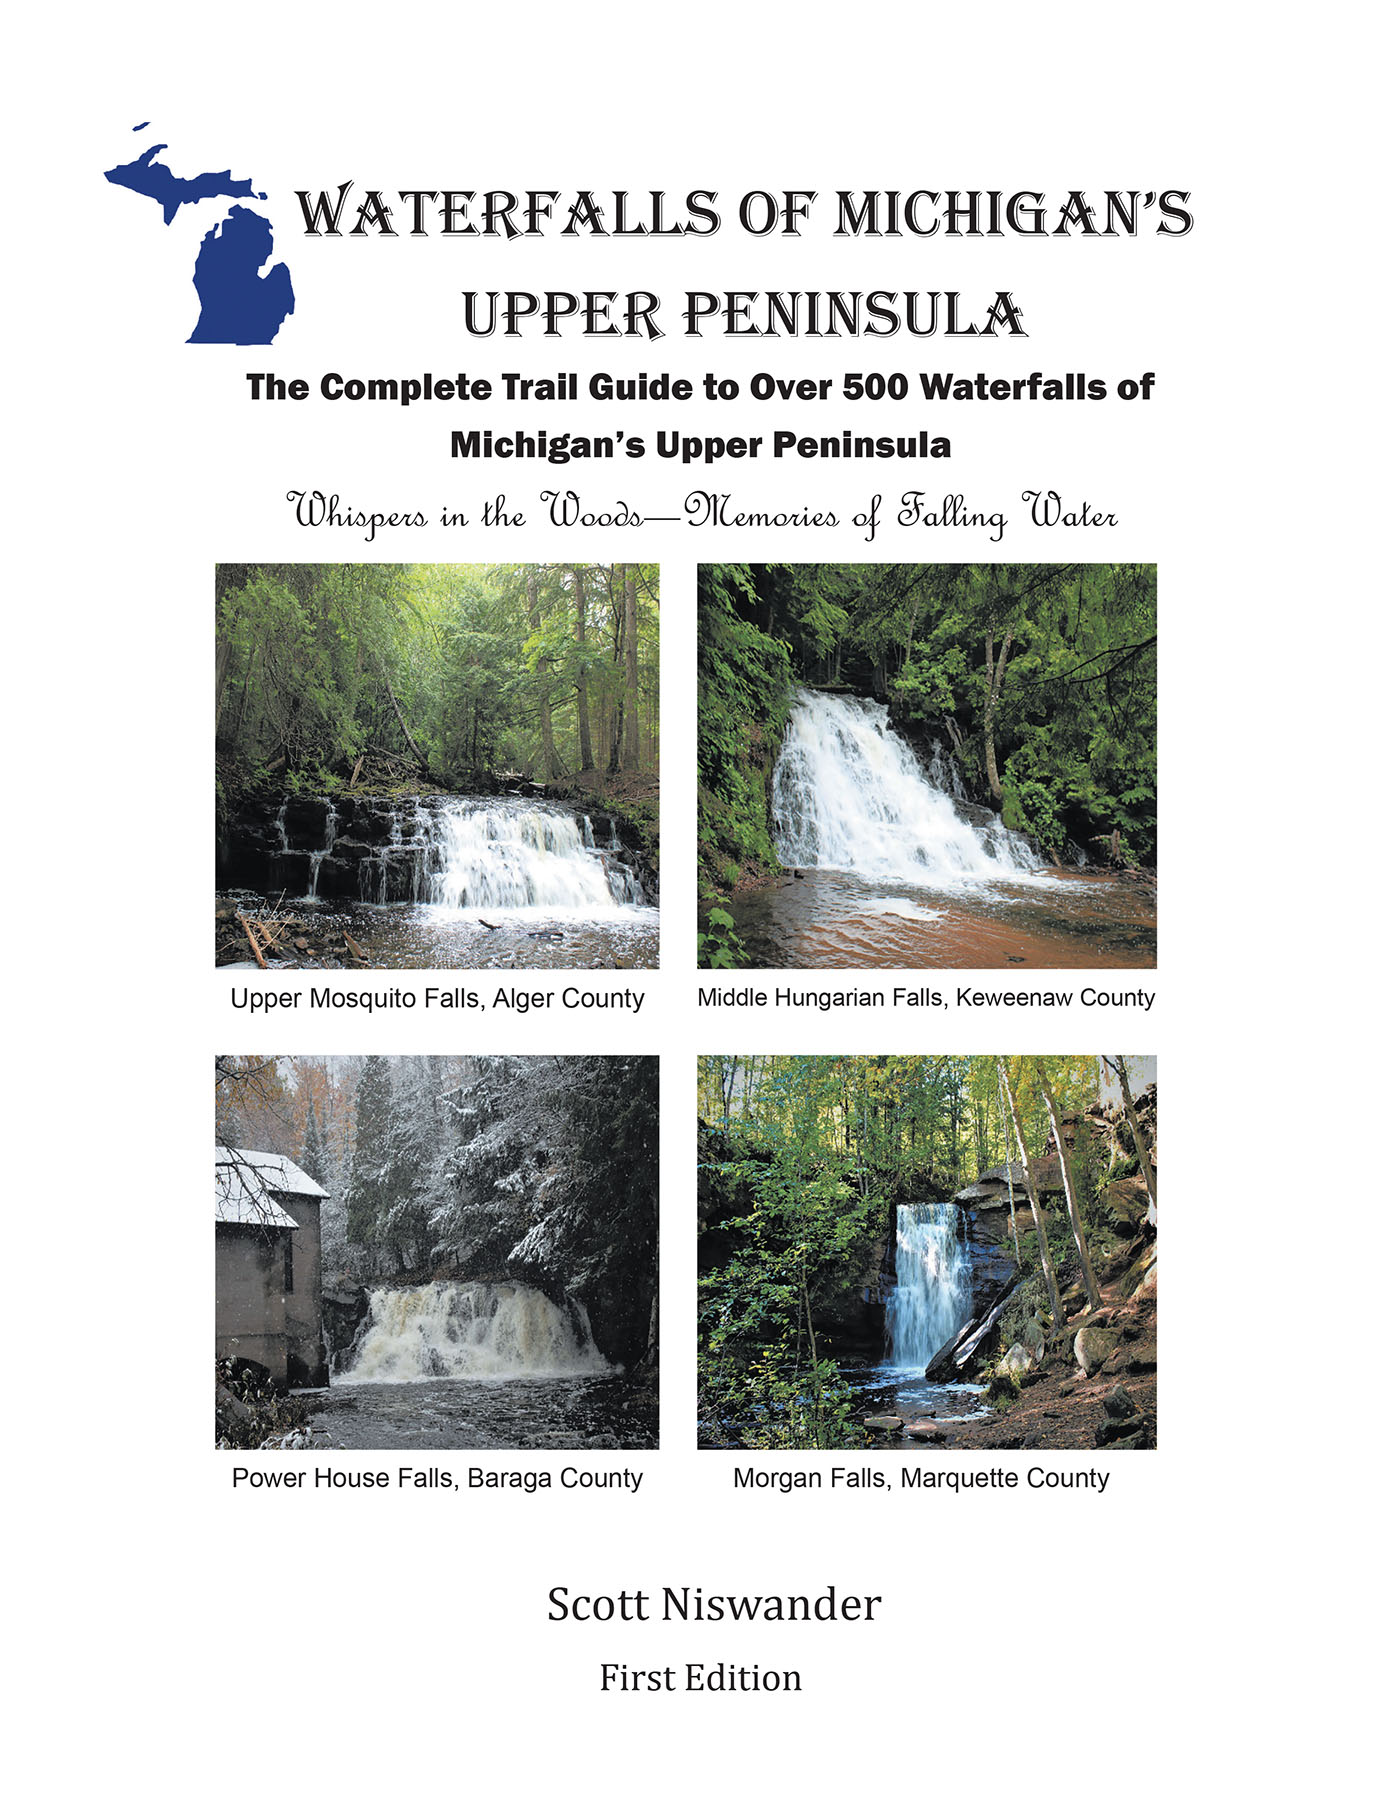 Author Scott Niswander’s New Book, "Waterfalls of Michigan's Upper Peninsula," Documents Over Five Hundred Waterfalls Located in Michigan’s Upper Peninsula